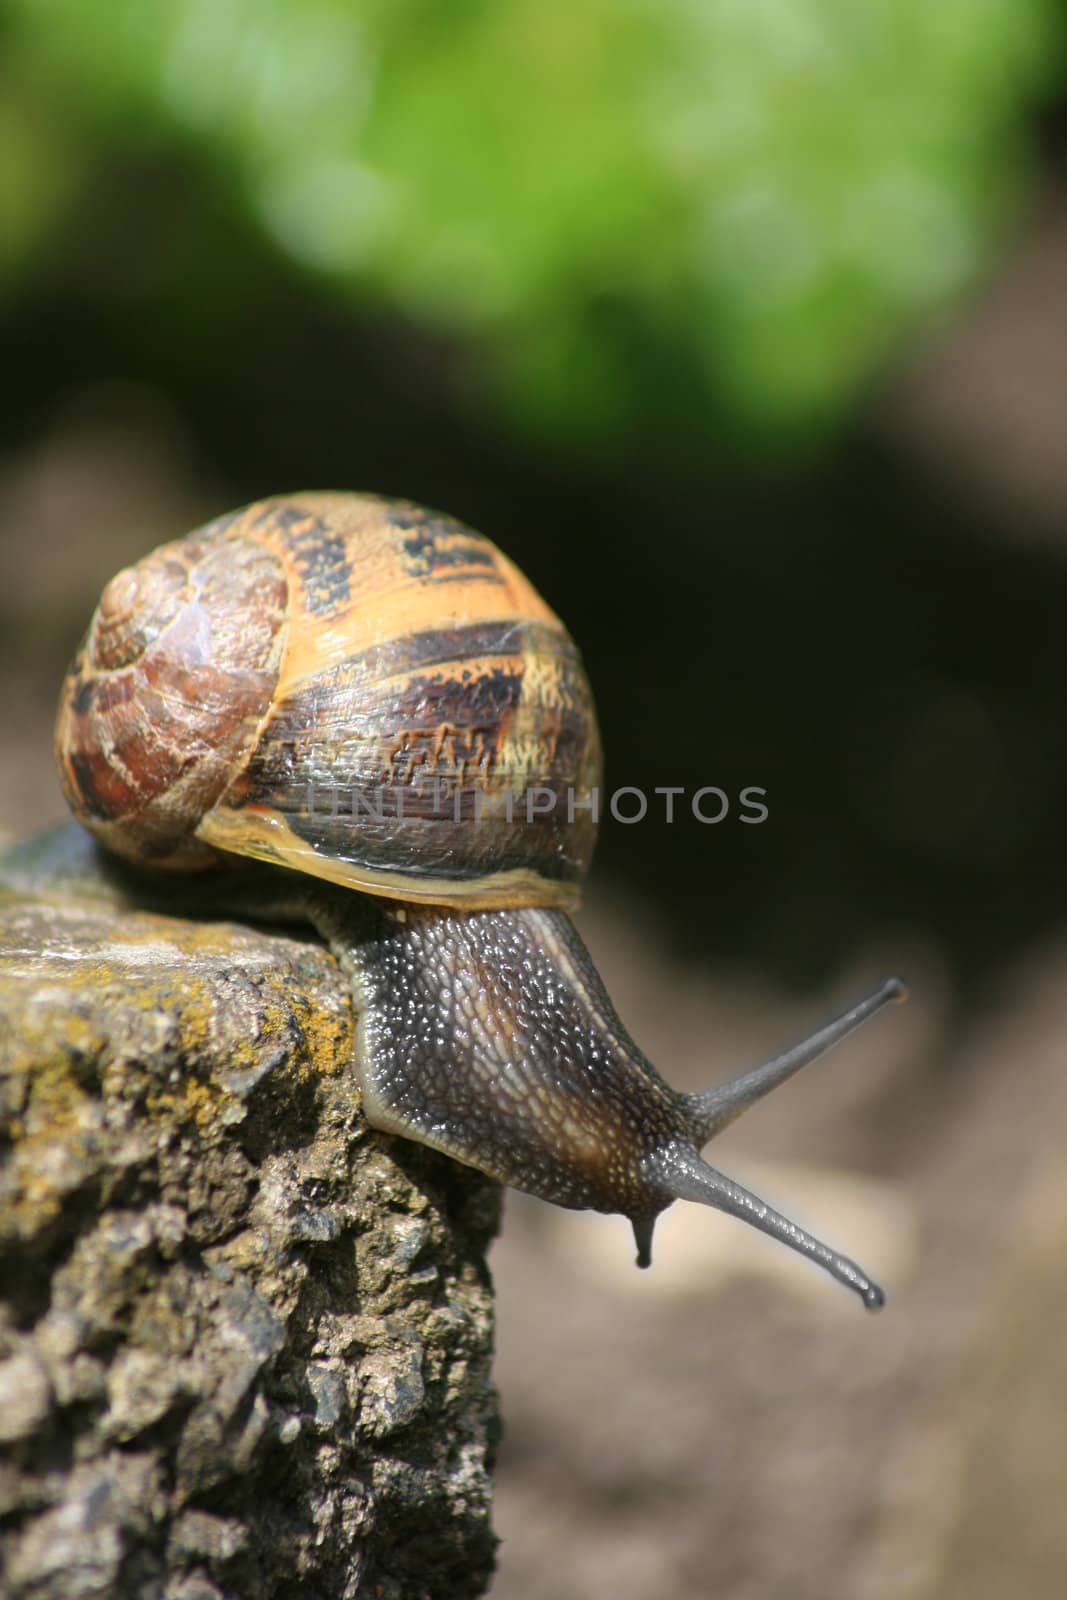 A common garden snail traversing the edge of a concrete paving stone. Close up detail.